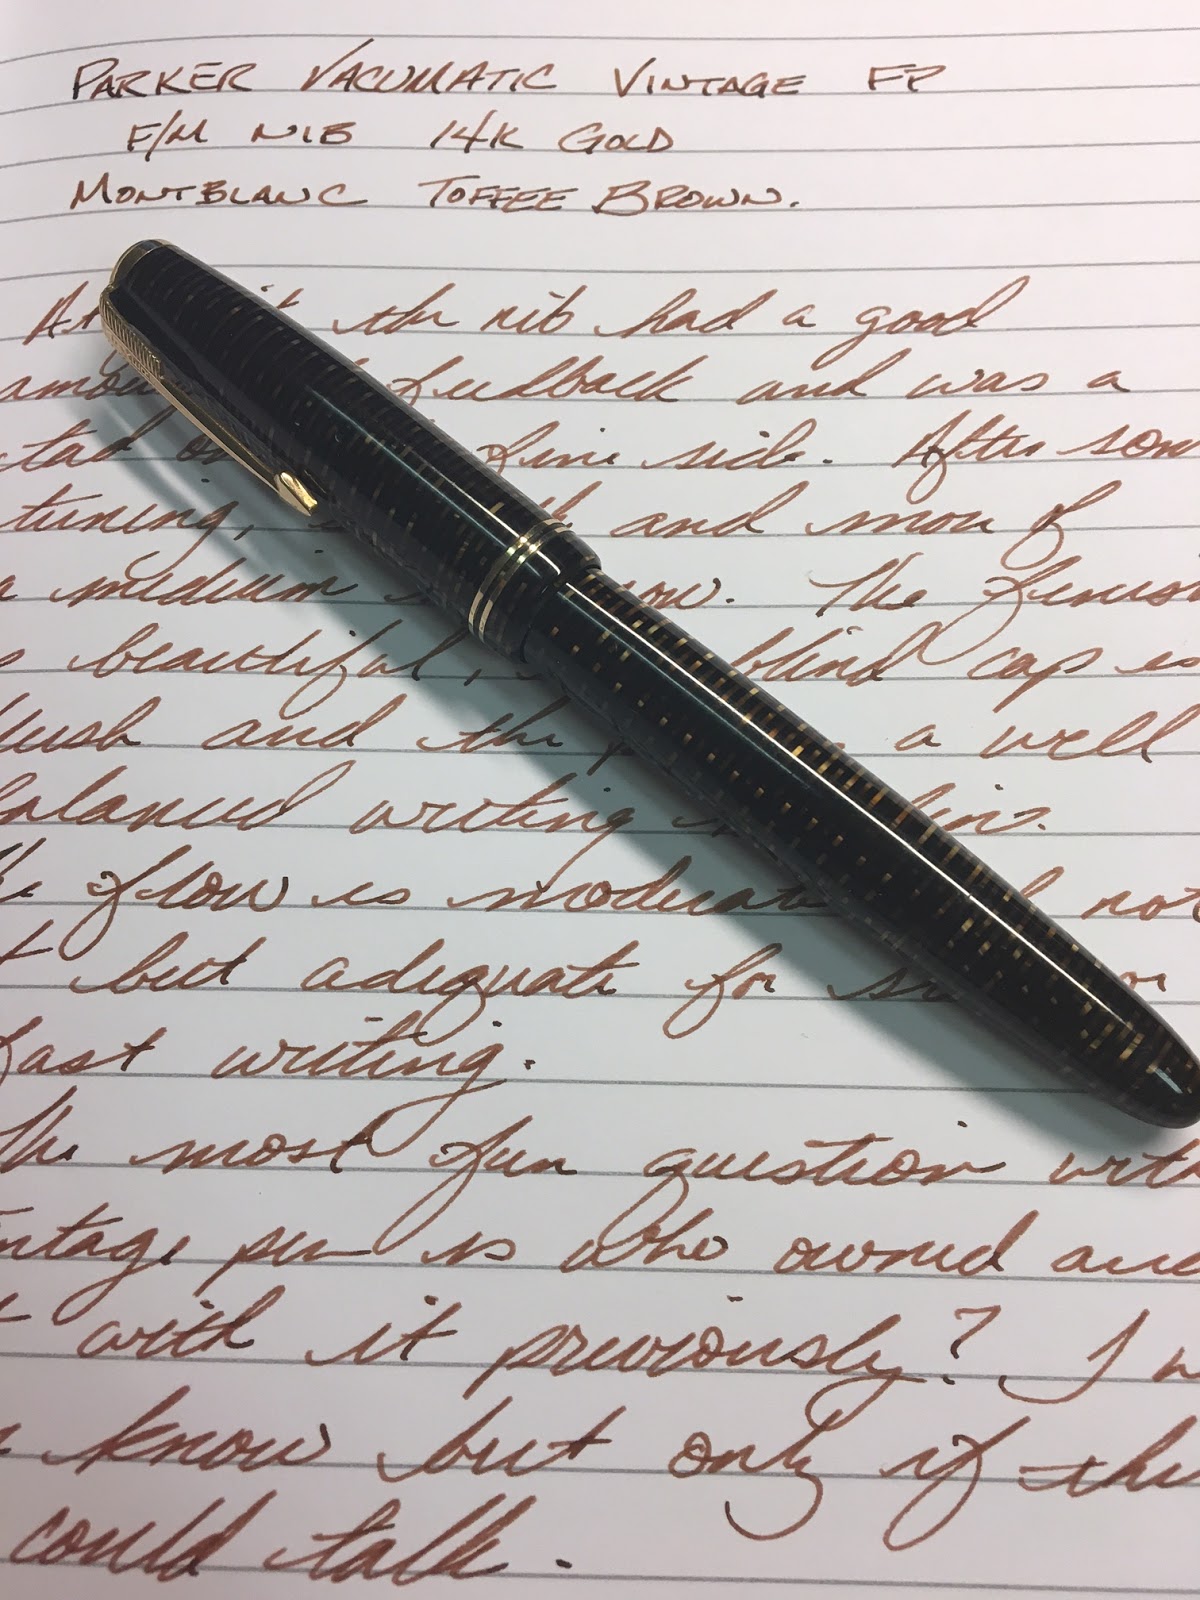 Bradford Journal with Pen